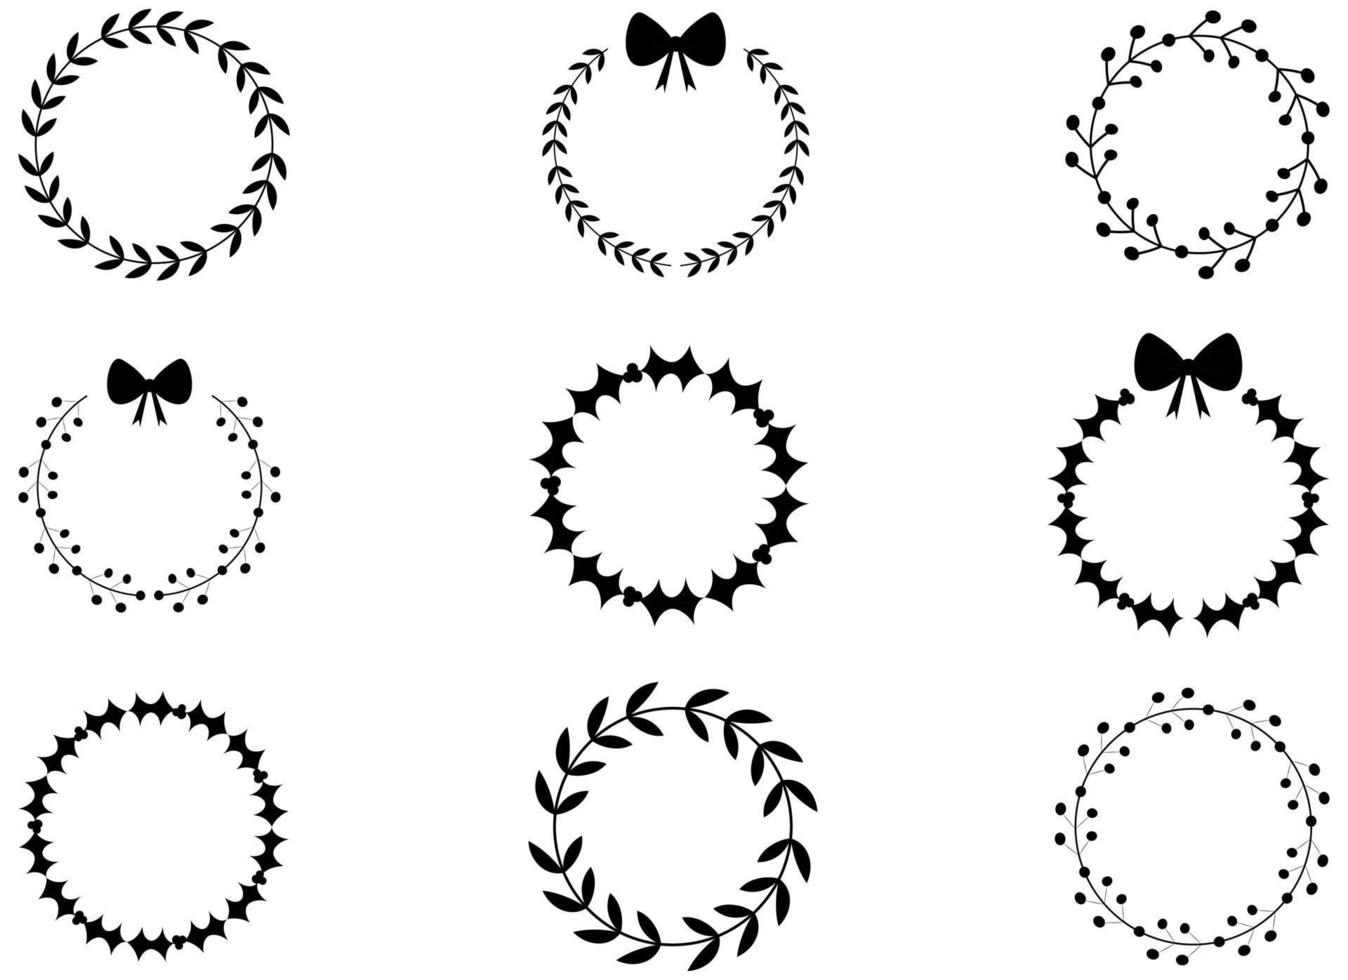 Christmas wreath design illustration isolated on white background vector